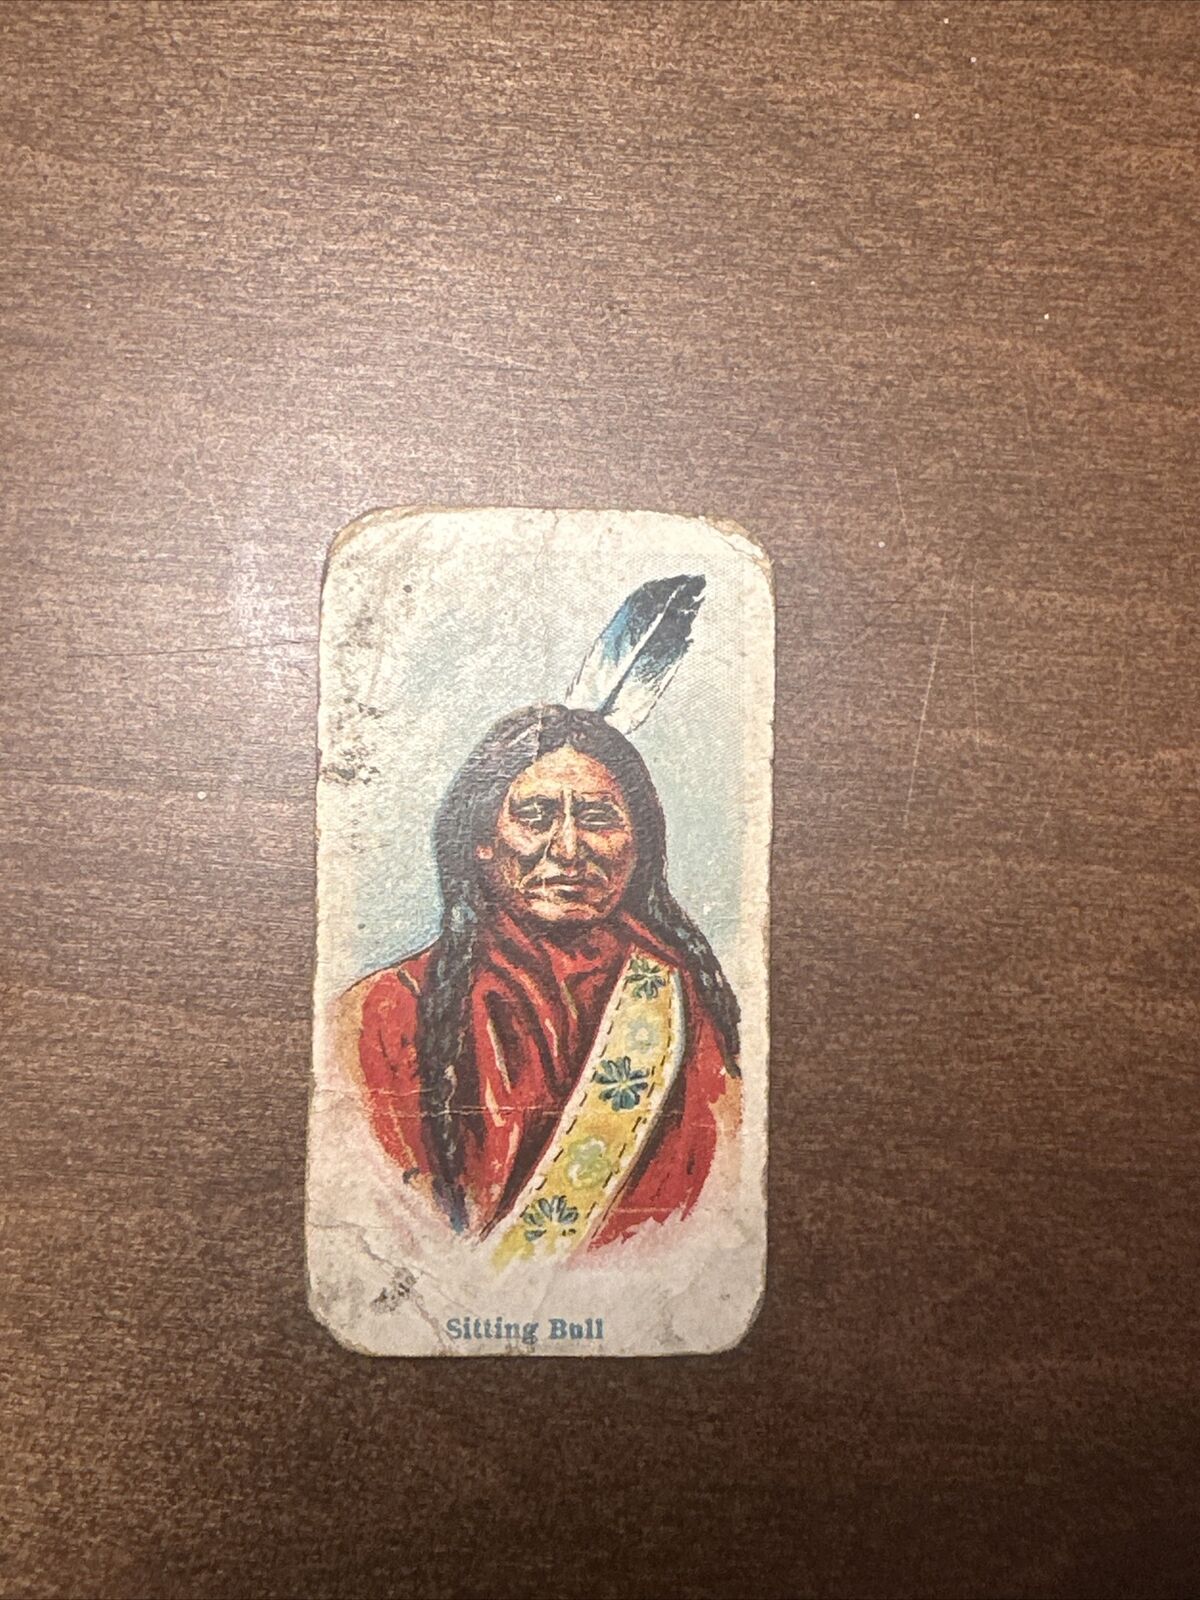 1910 E49 American Caramel Wild West Sitting Bull Card